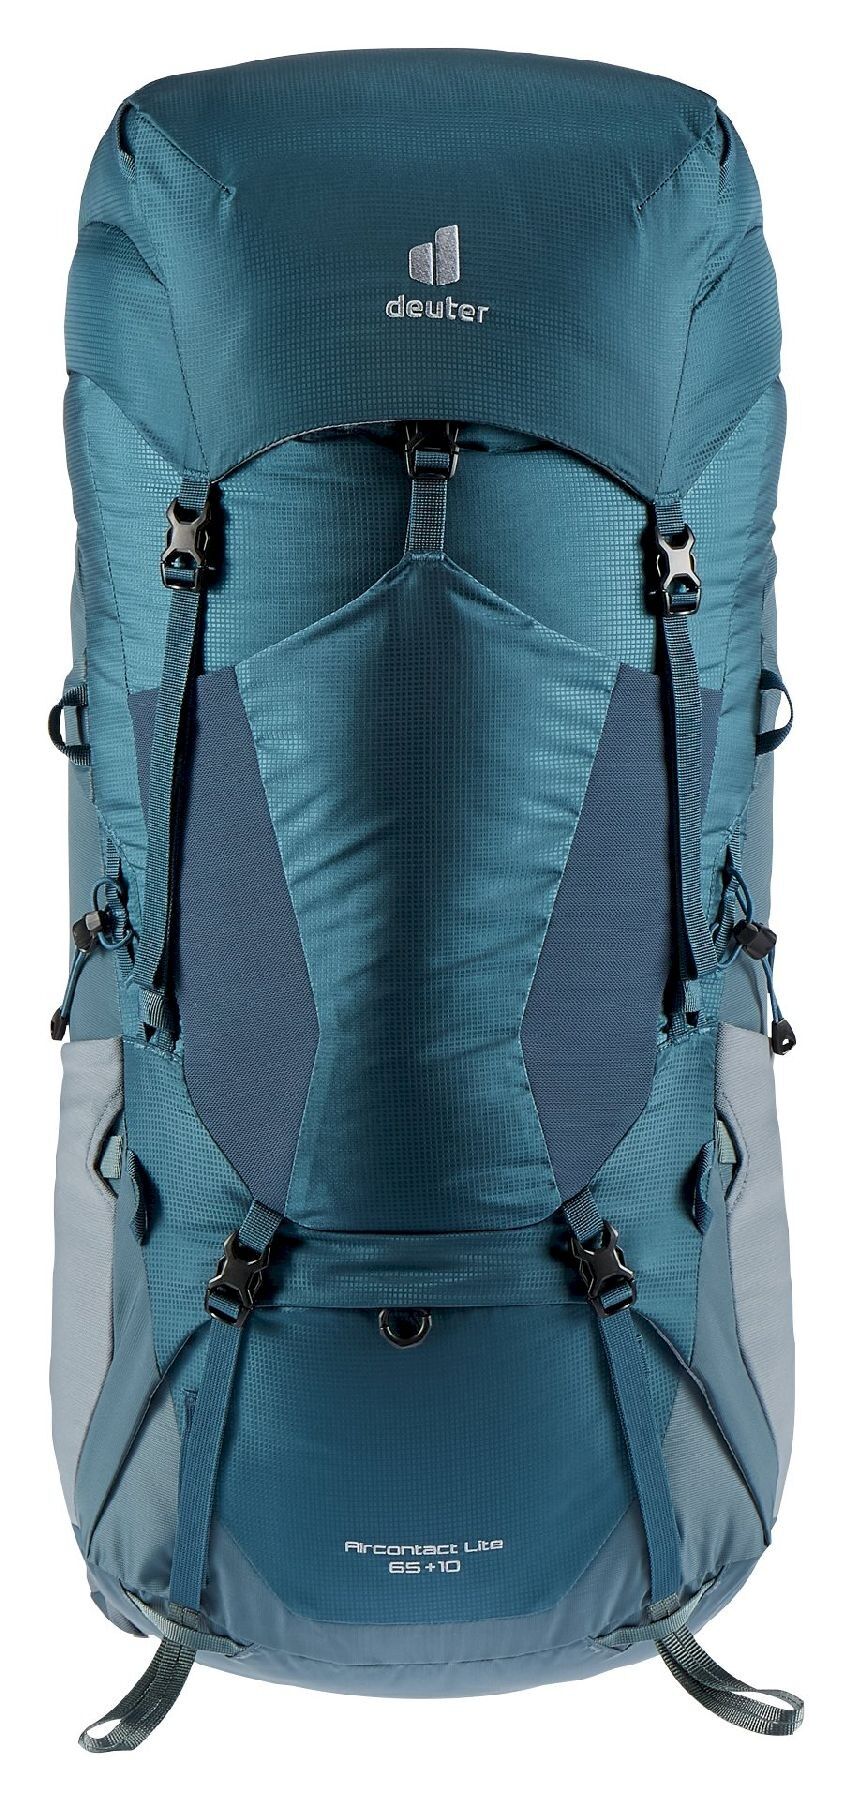 Deuter Aircontact Lite 65 + 10 - Hiking backpack - Men's